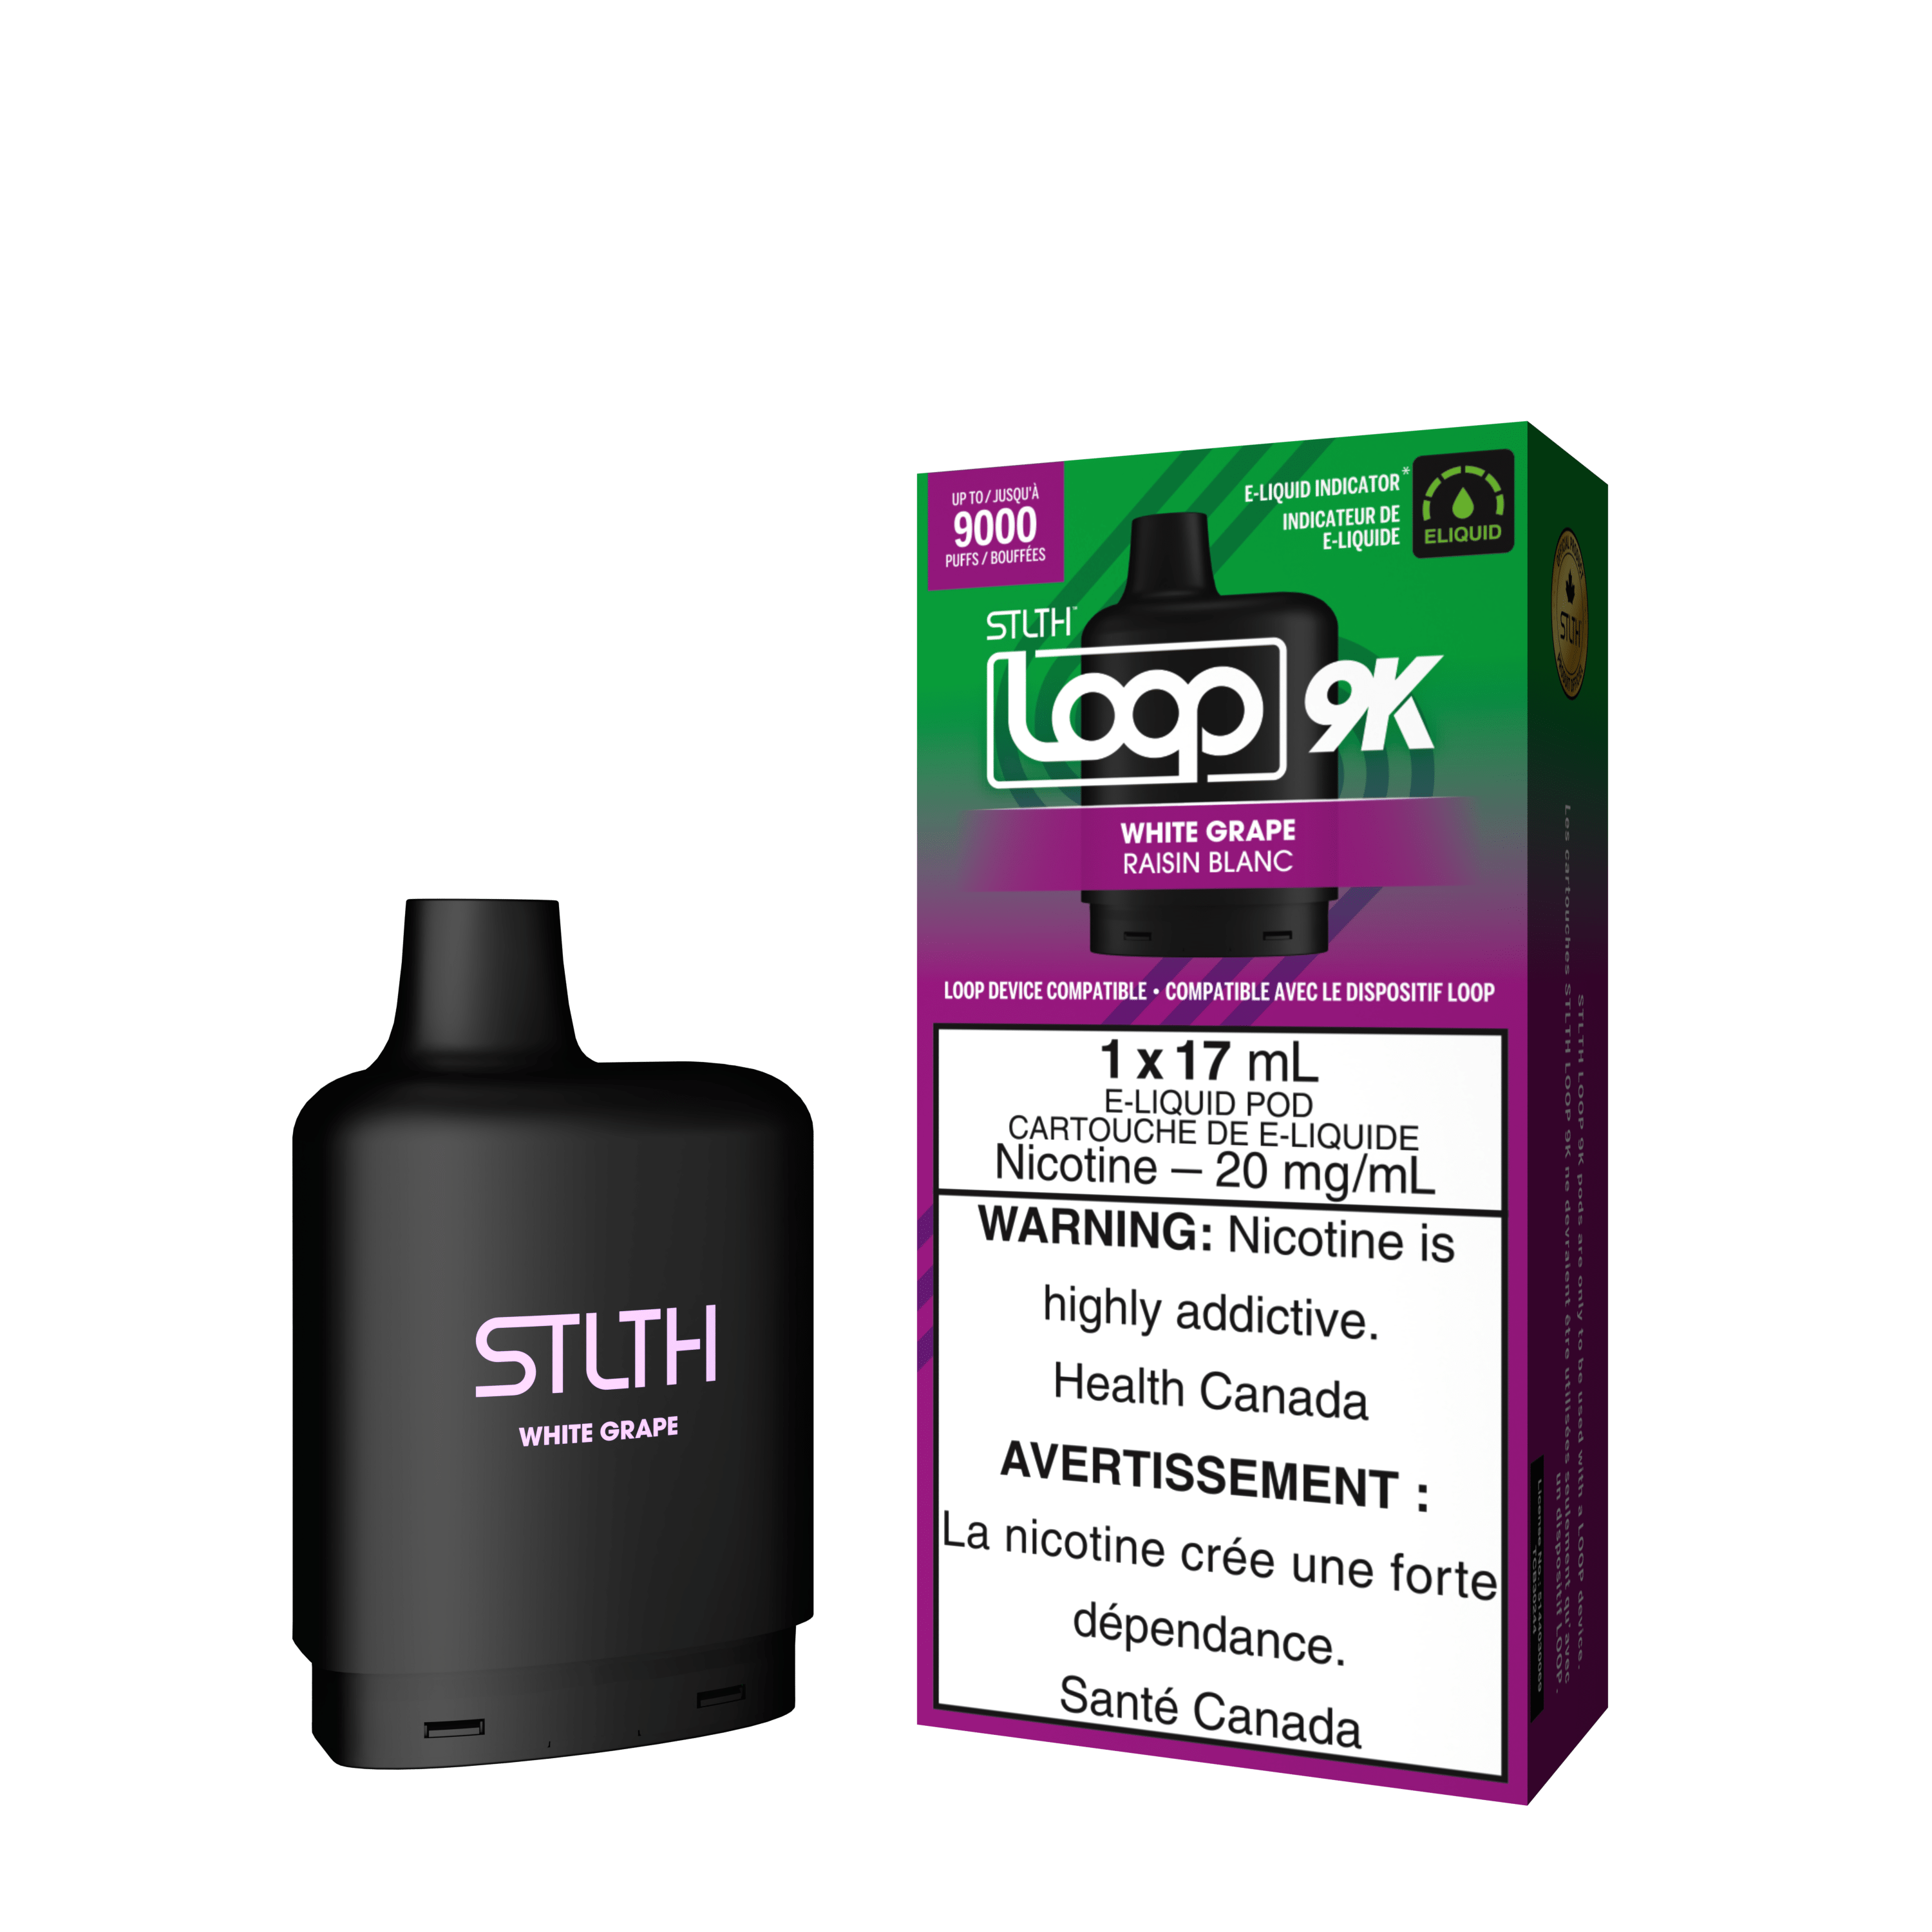 STLTH Loop 9K Pod - White Grape available on Canada online vape shop